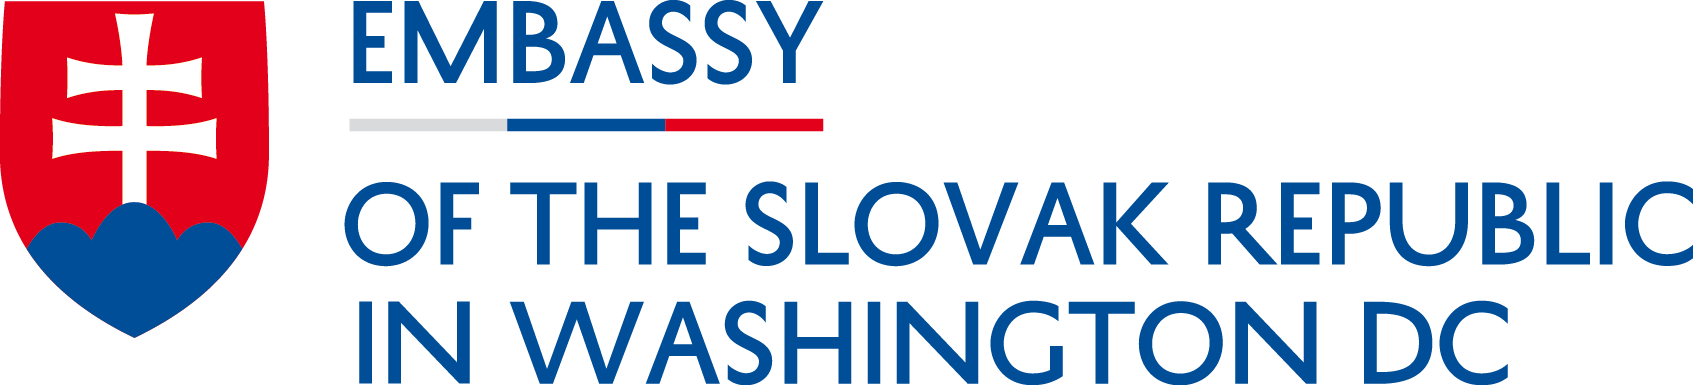 Open House in Embassy of the Slovak Republic in Washington, D.C. logo